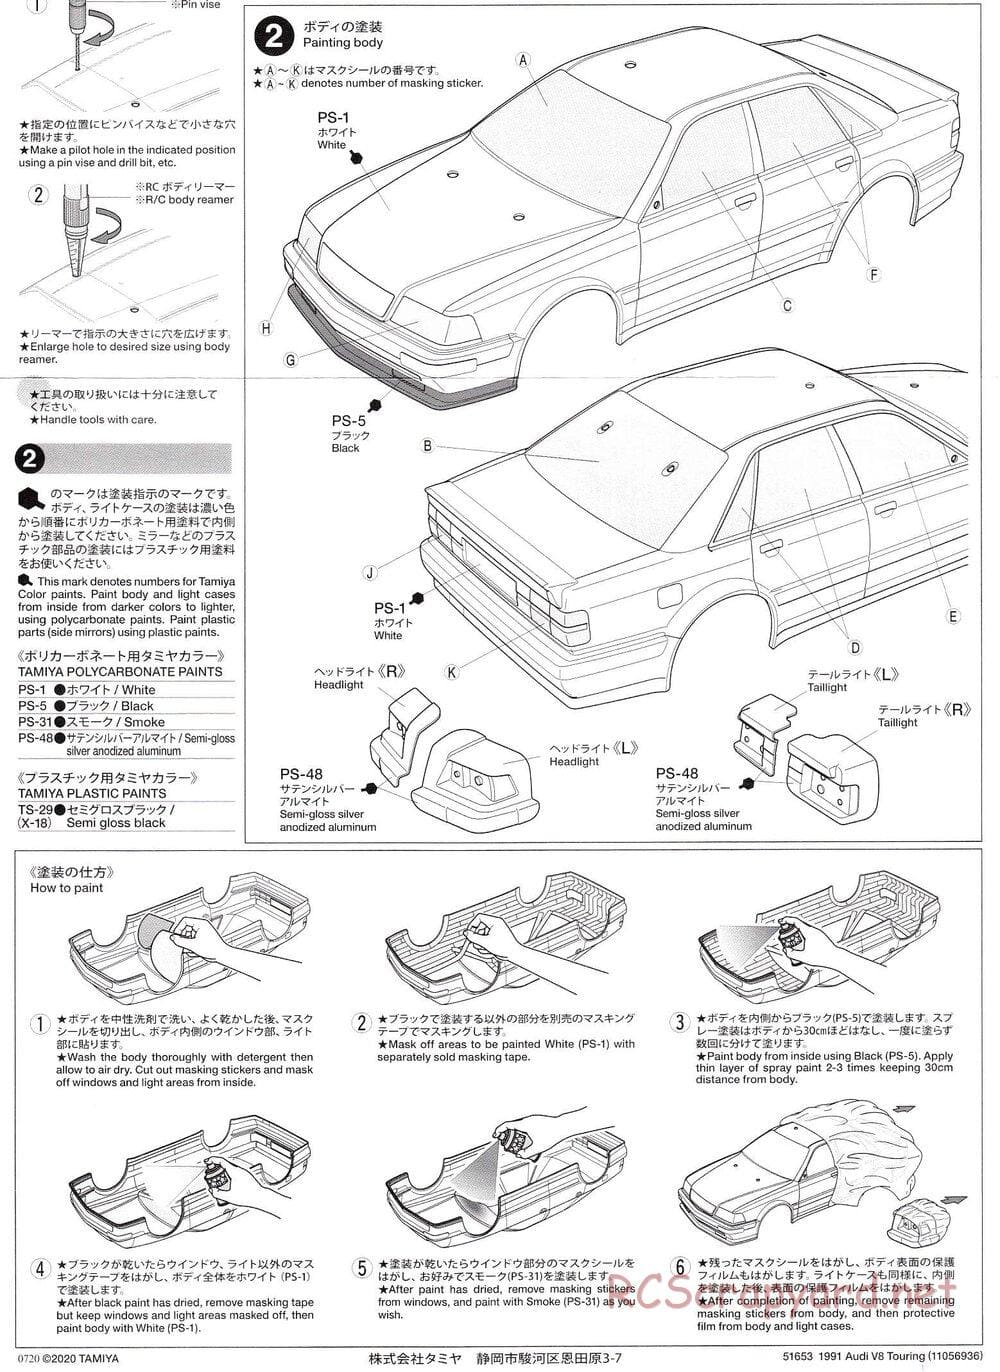 Tamiya - 1991 Audi V8 Touring - TT-02 Chassis - Body Manual - Page 3